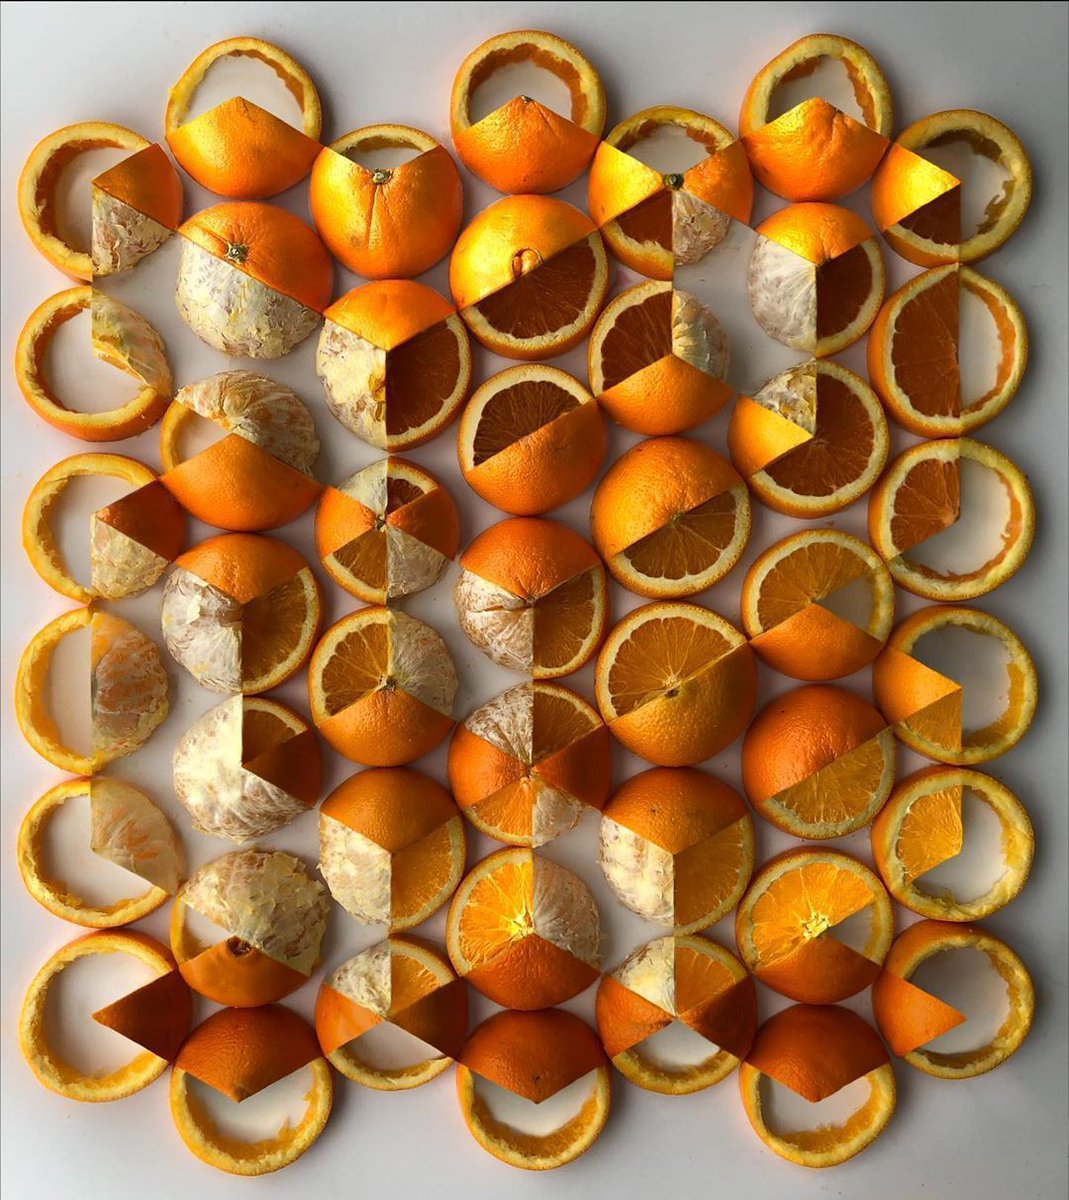 Orange Geometry Design 🍊 by Adam Hillman #orange #design #art #inspiration